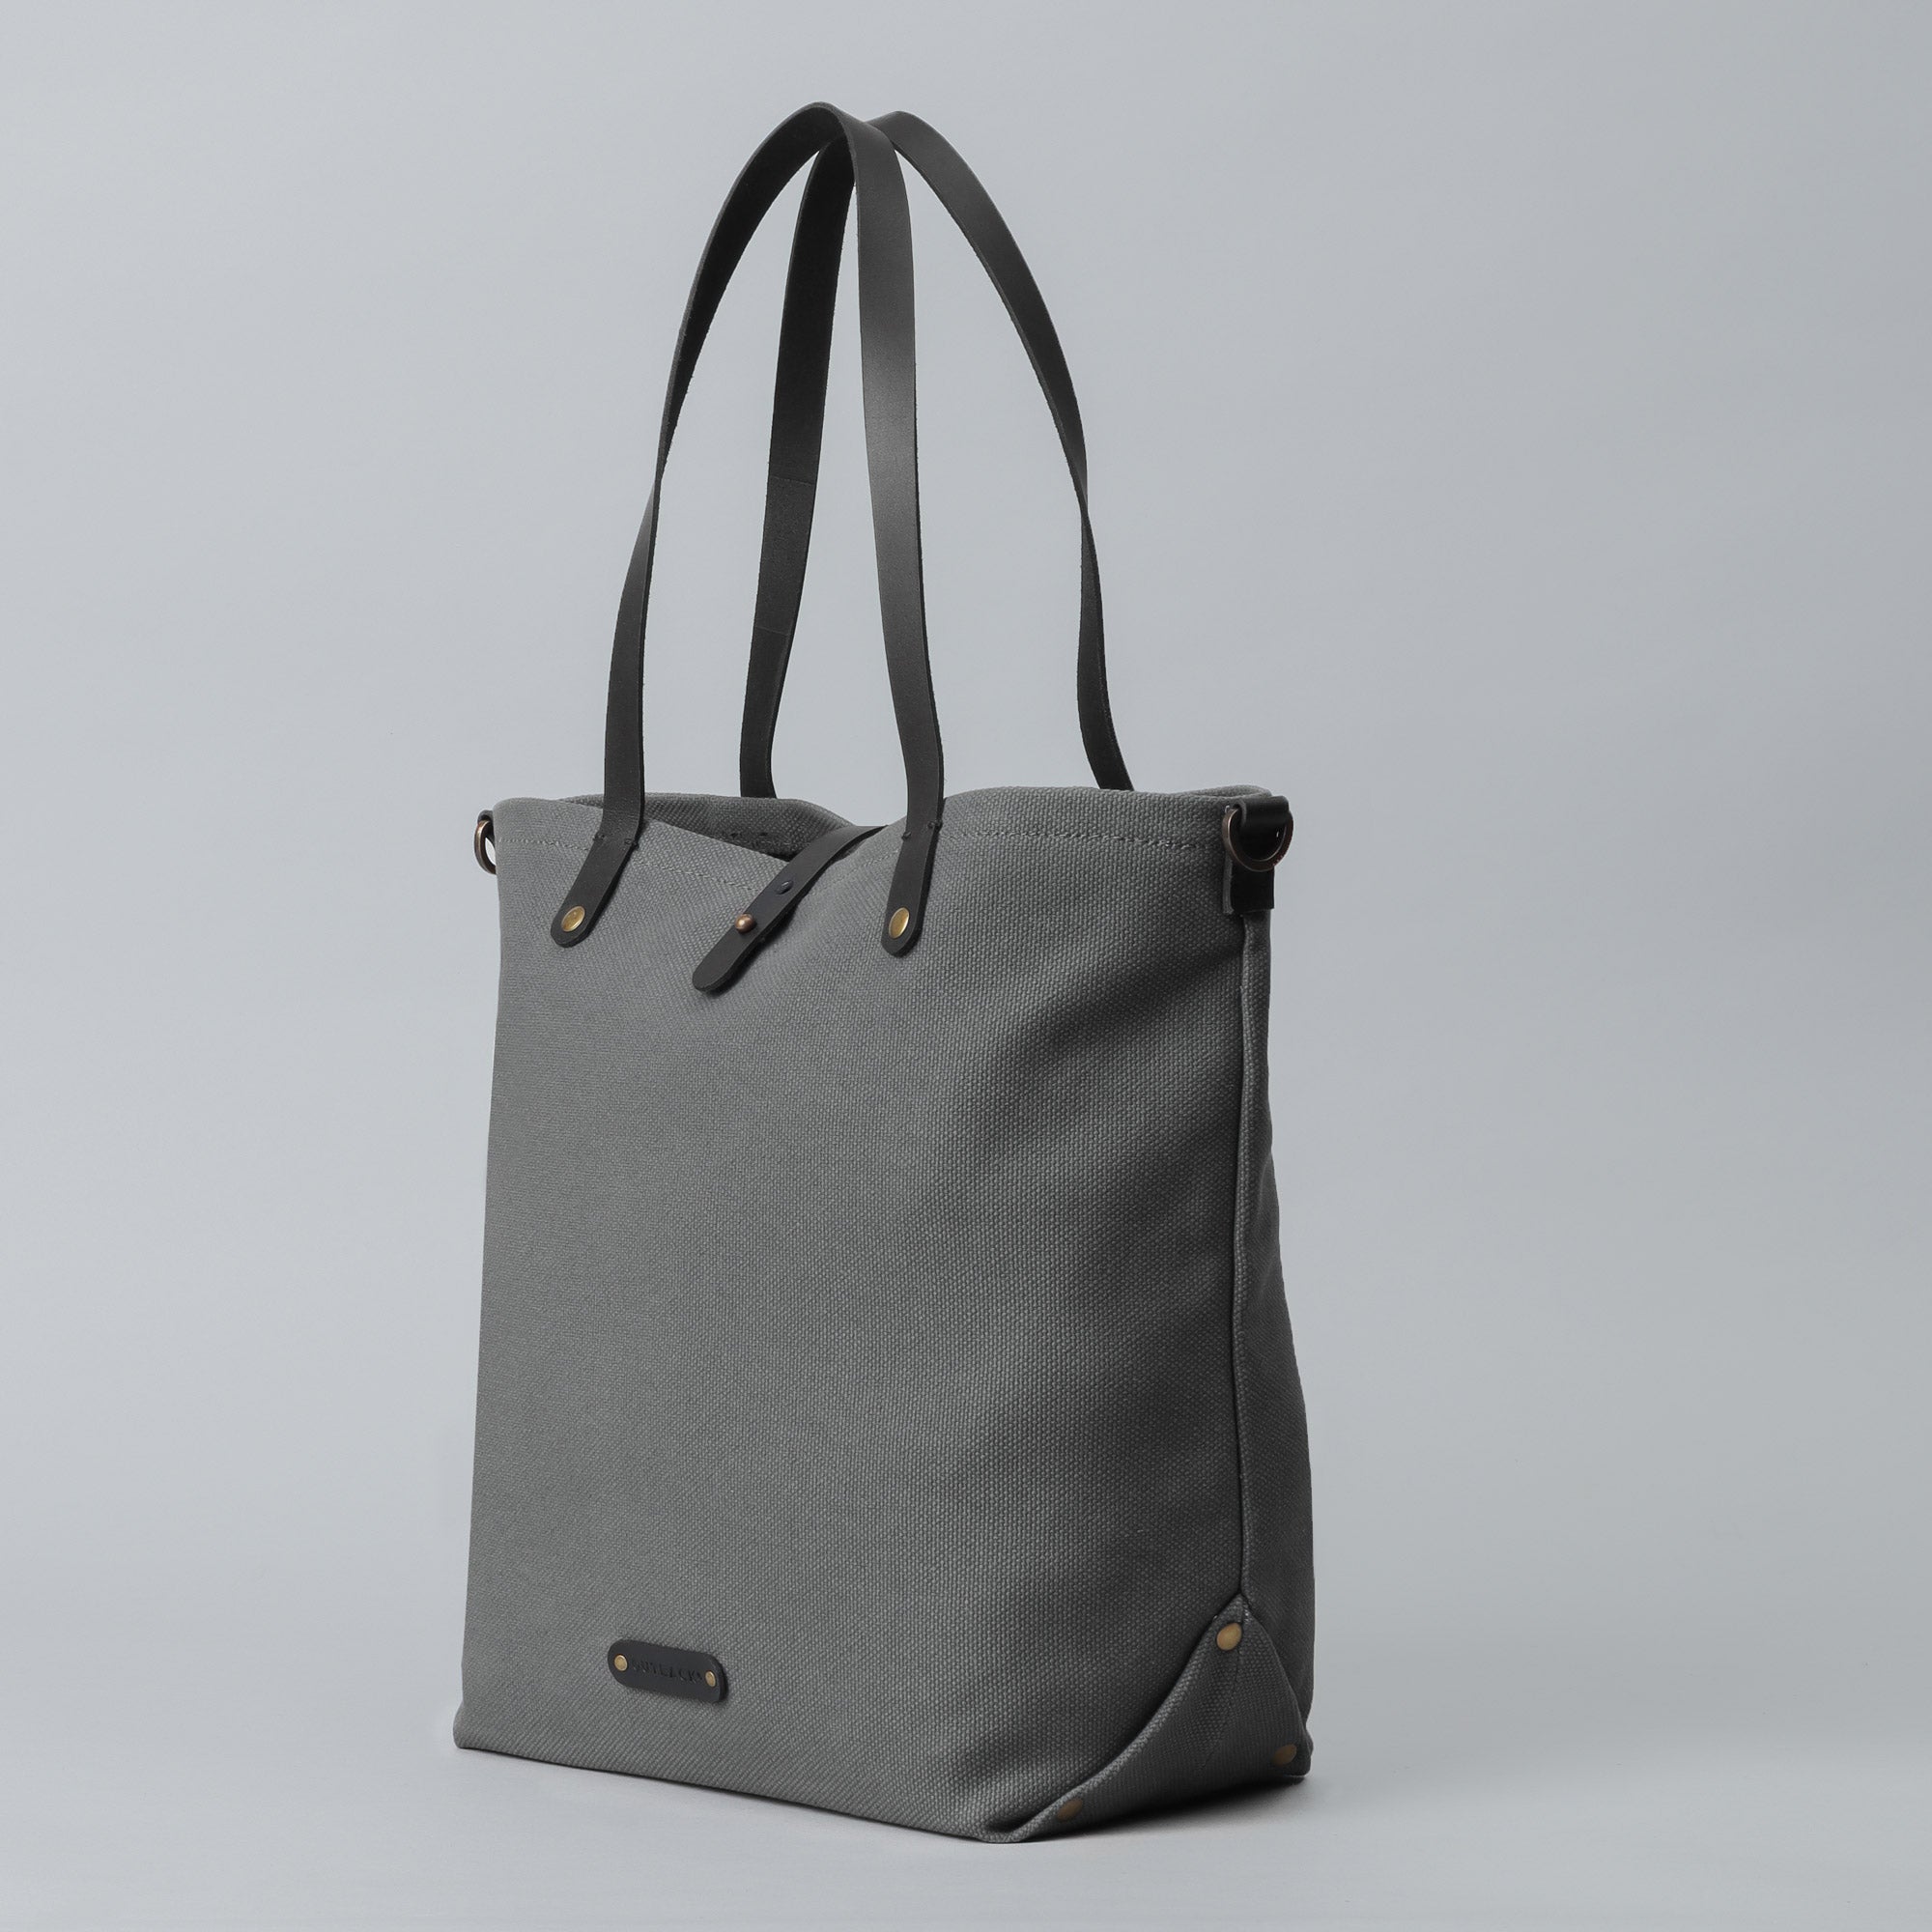 Designer canvas tote bag